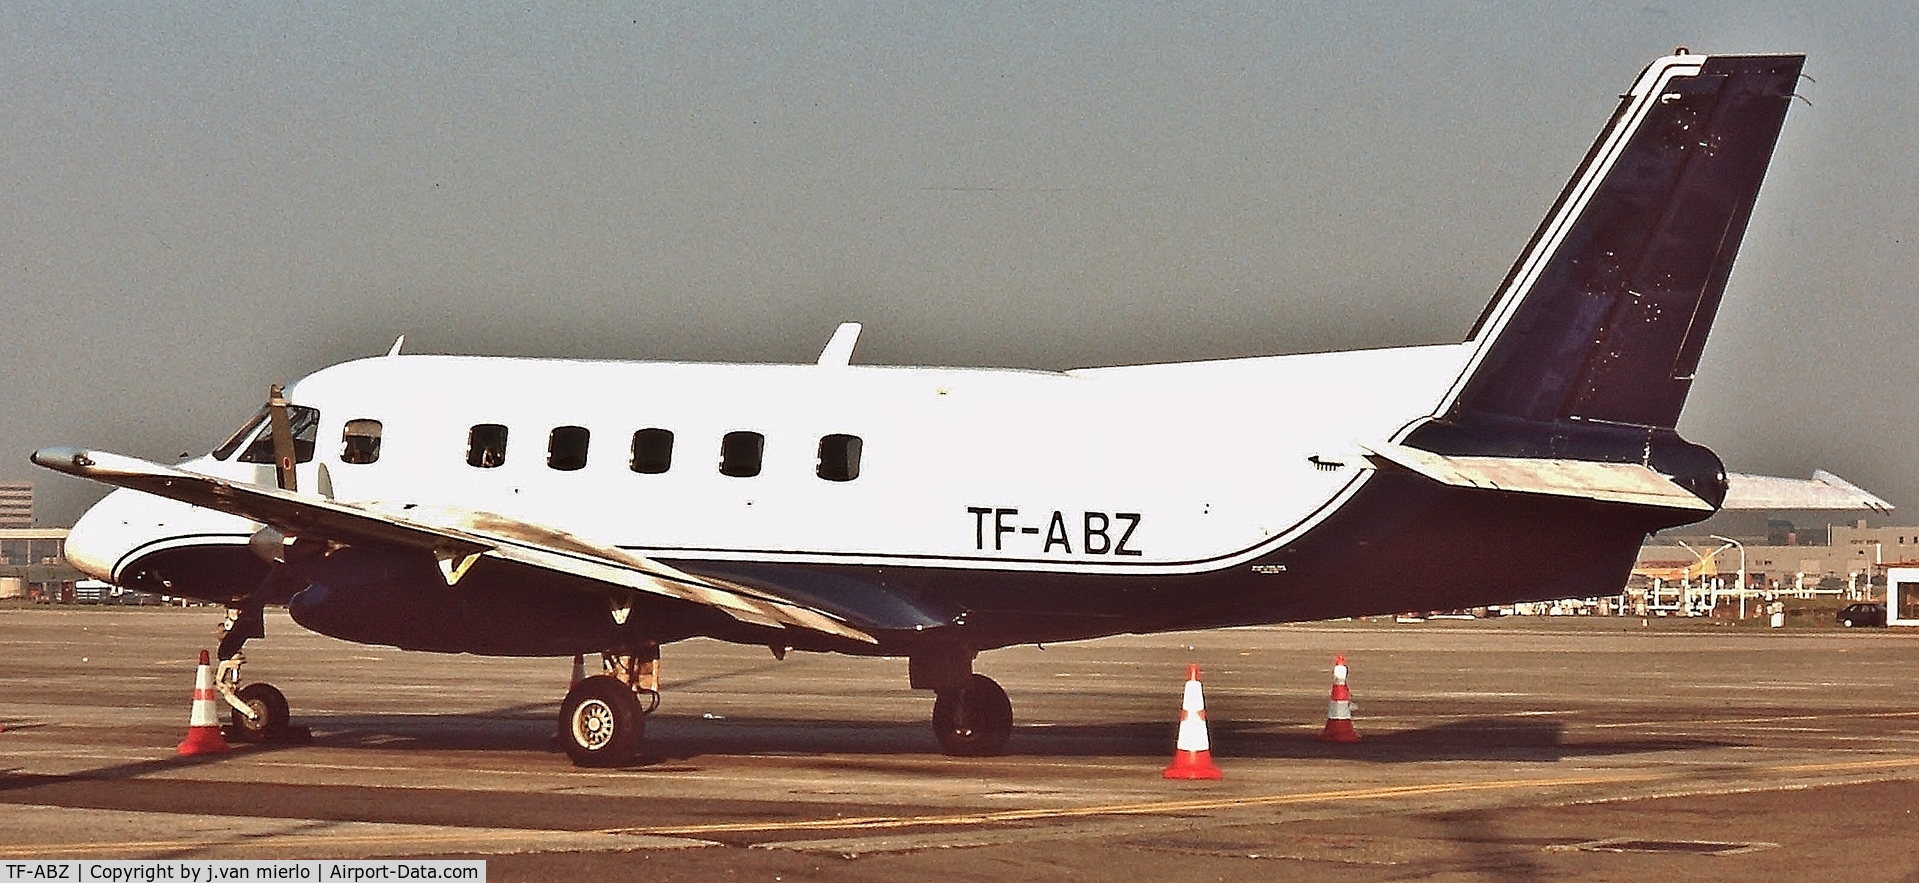 TF-ABZ, 1979 Embraer EMB-110P1 Bandeirante C/N 110222, Flying parcels FEDEX ramp Brussels, Belgium '90s